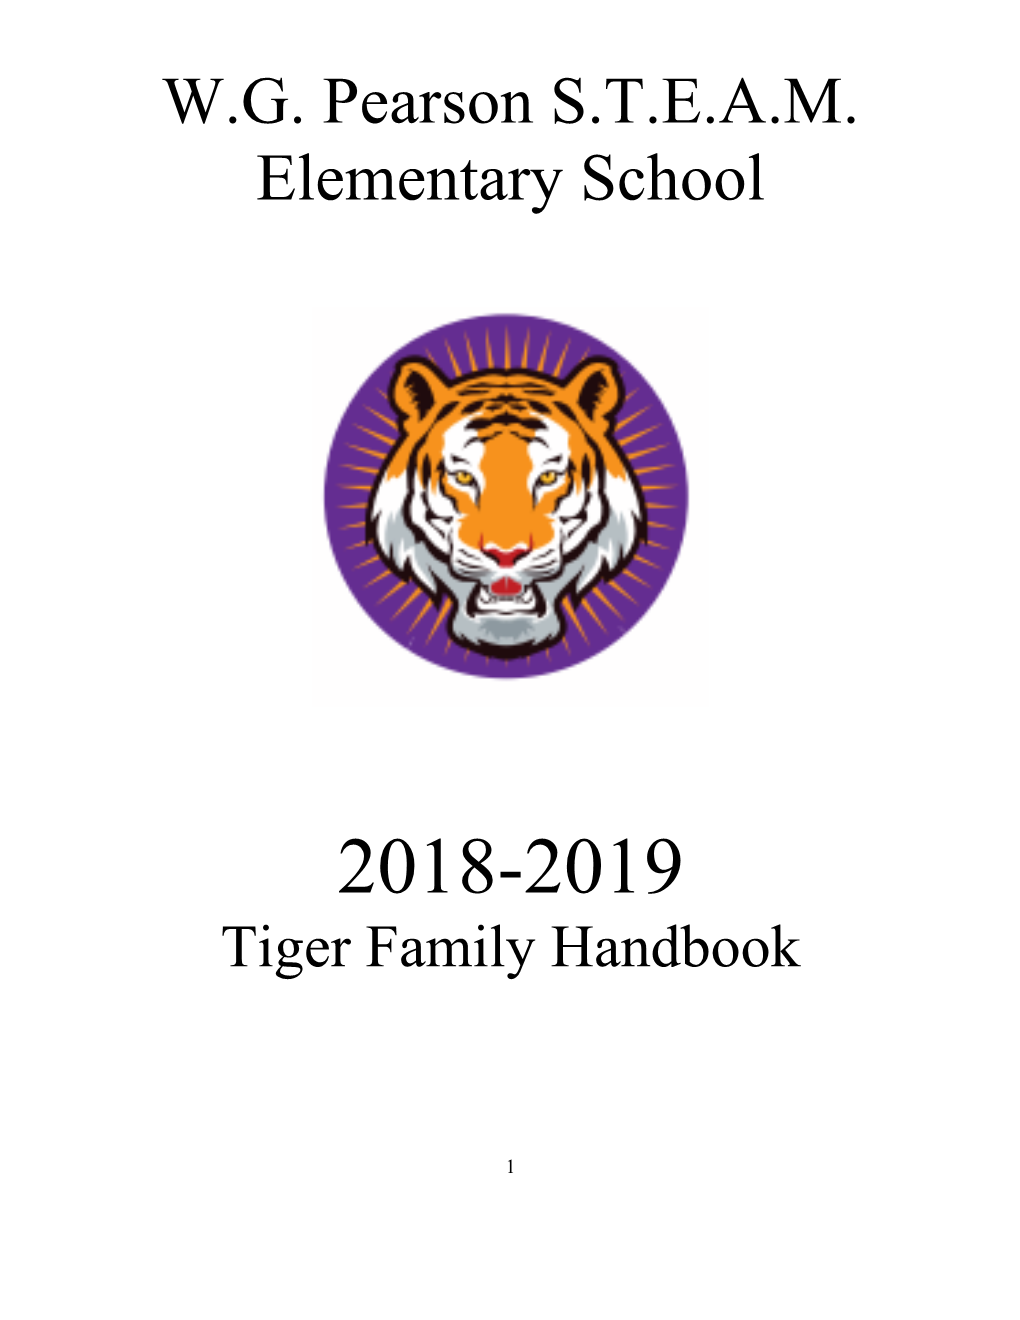 W.G. Pearson 2018-2019 Family Handbook-Updated 7-27-18